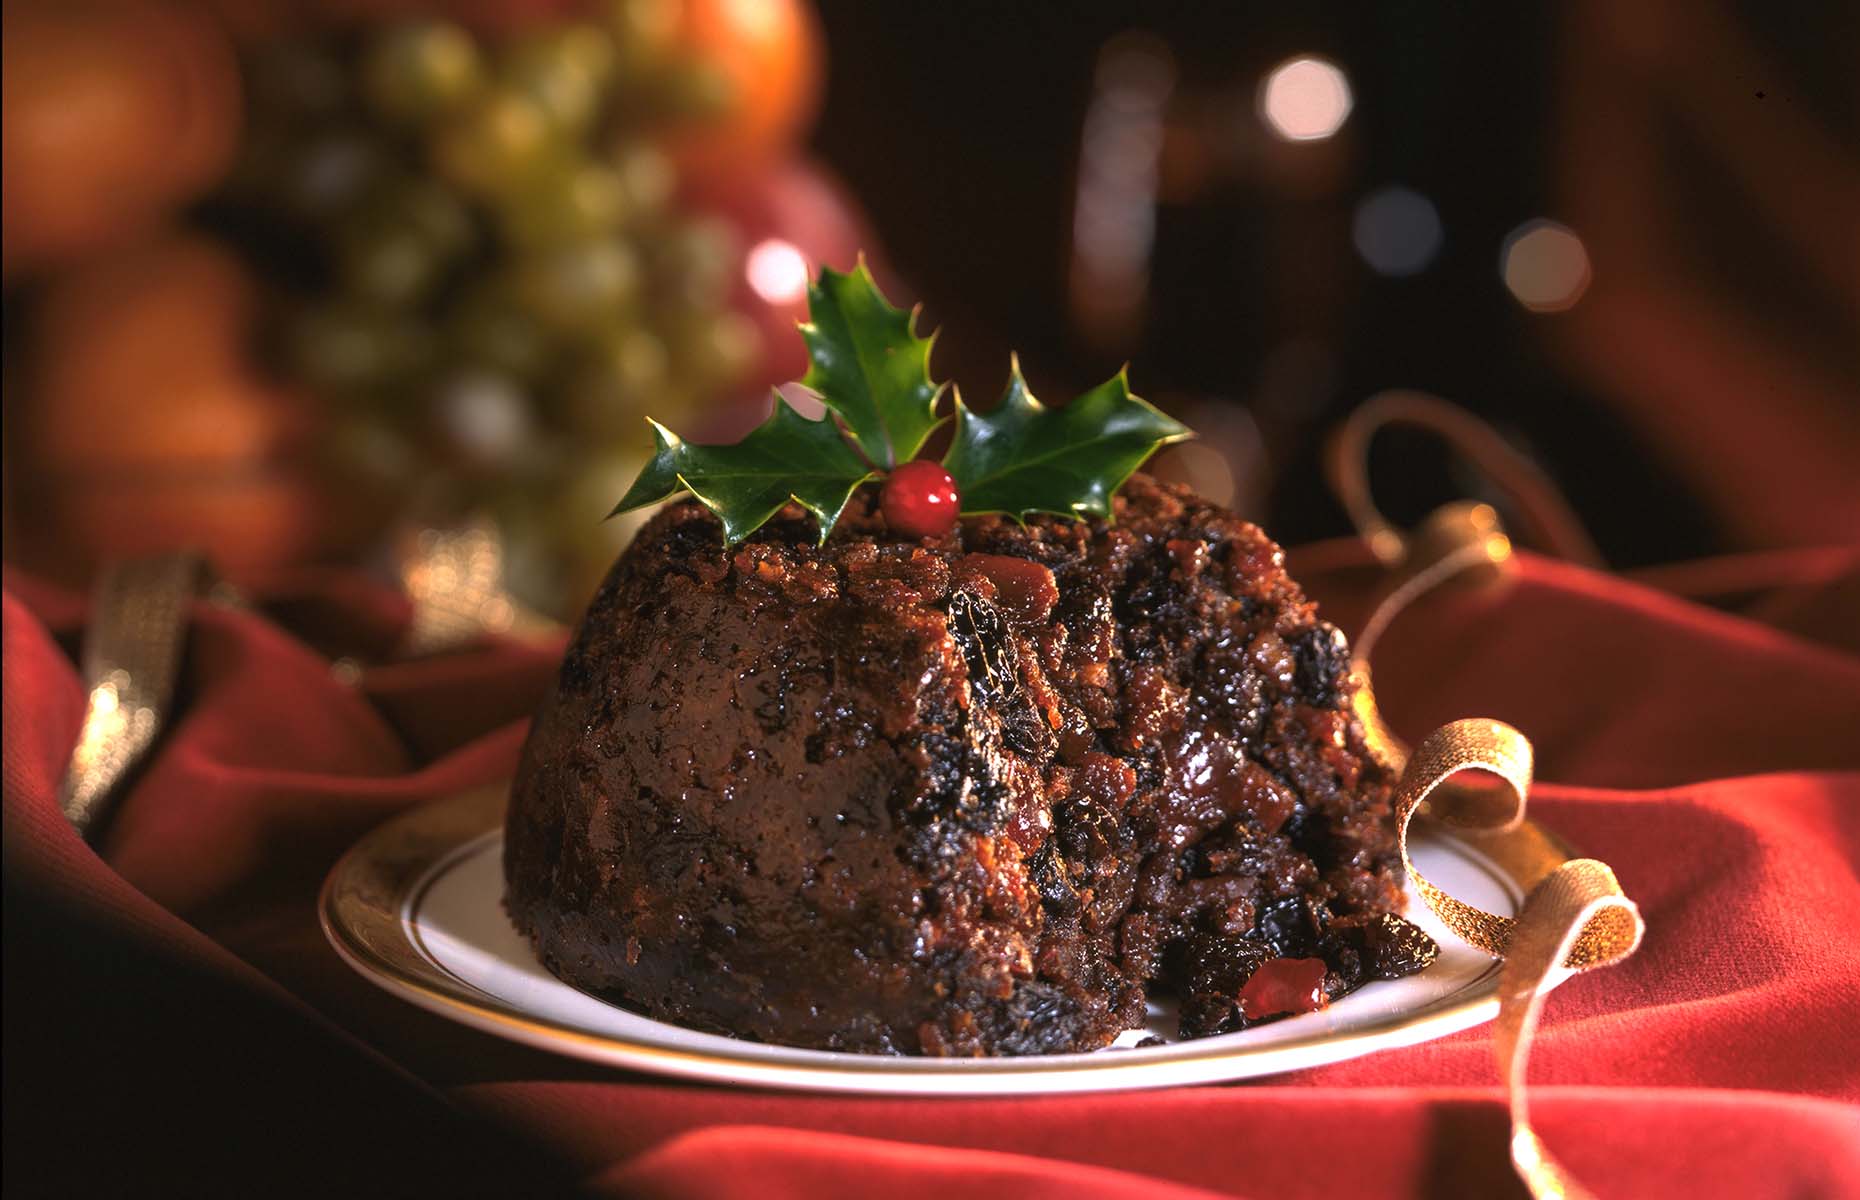 Christmas pudding inside (Image: Nicholas Provan/Shutterstock)